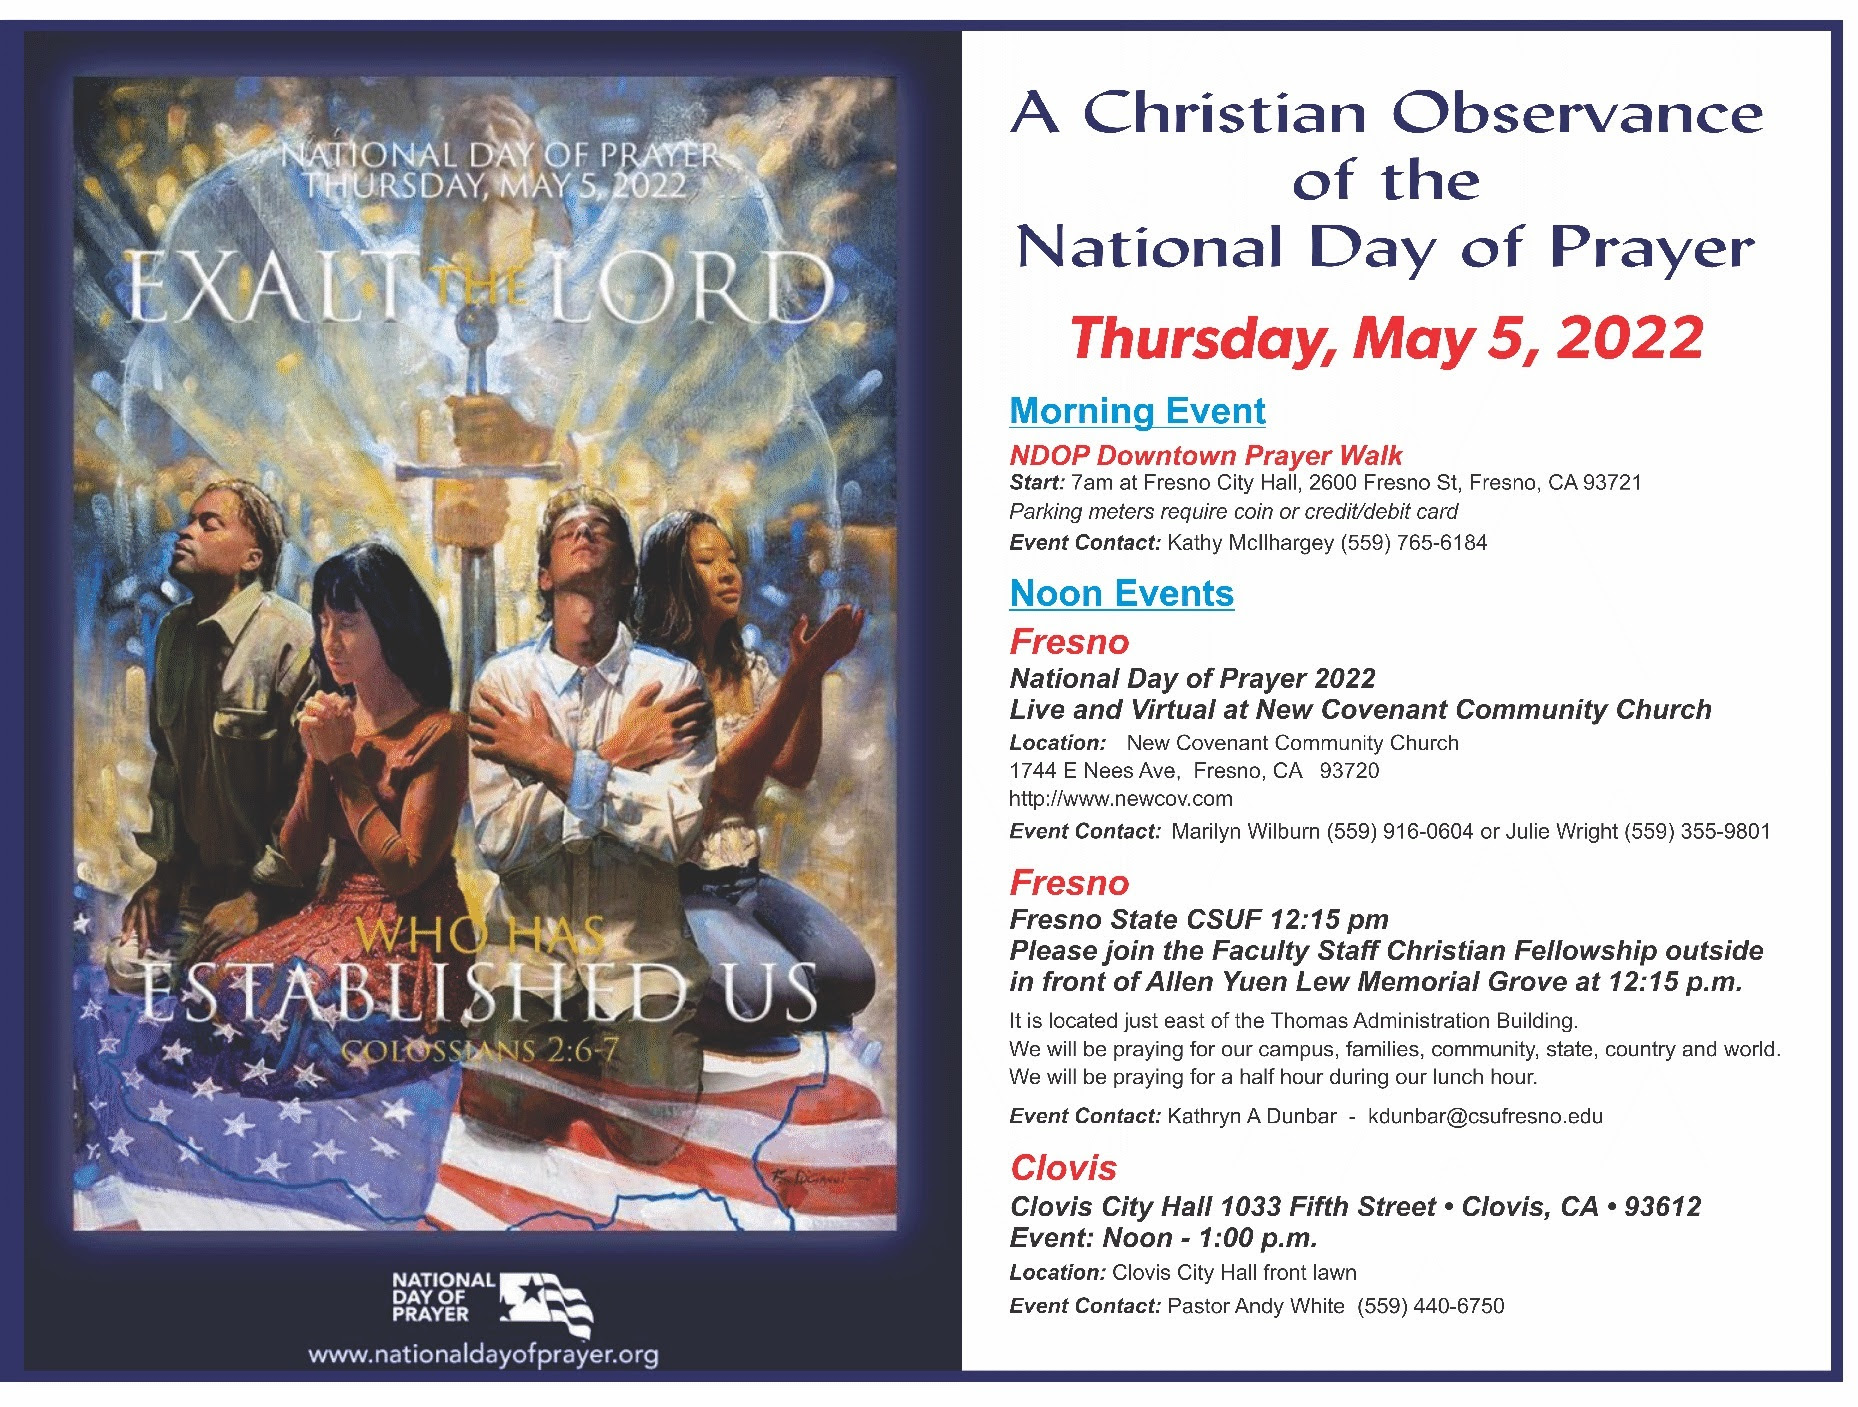 Fresno Clovis National Day of Prayer Events